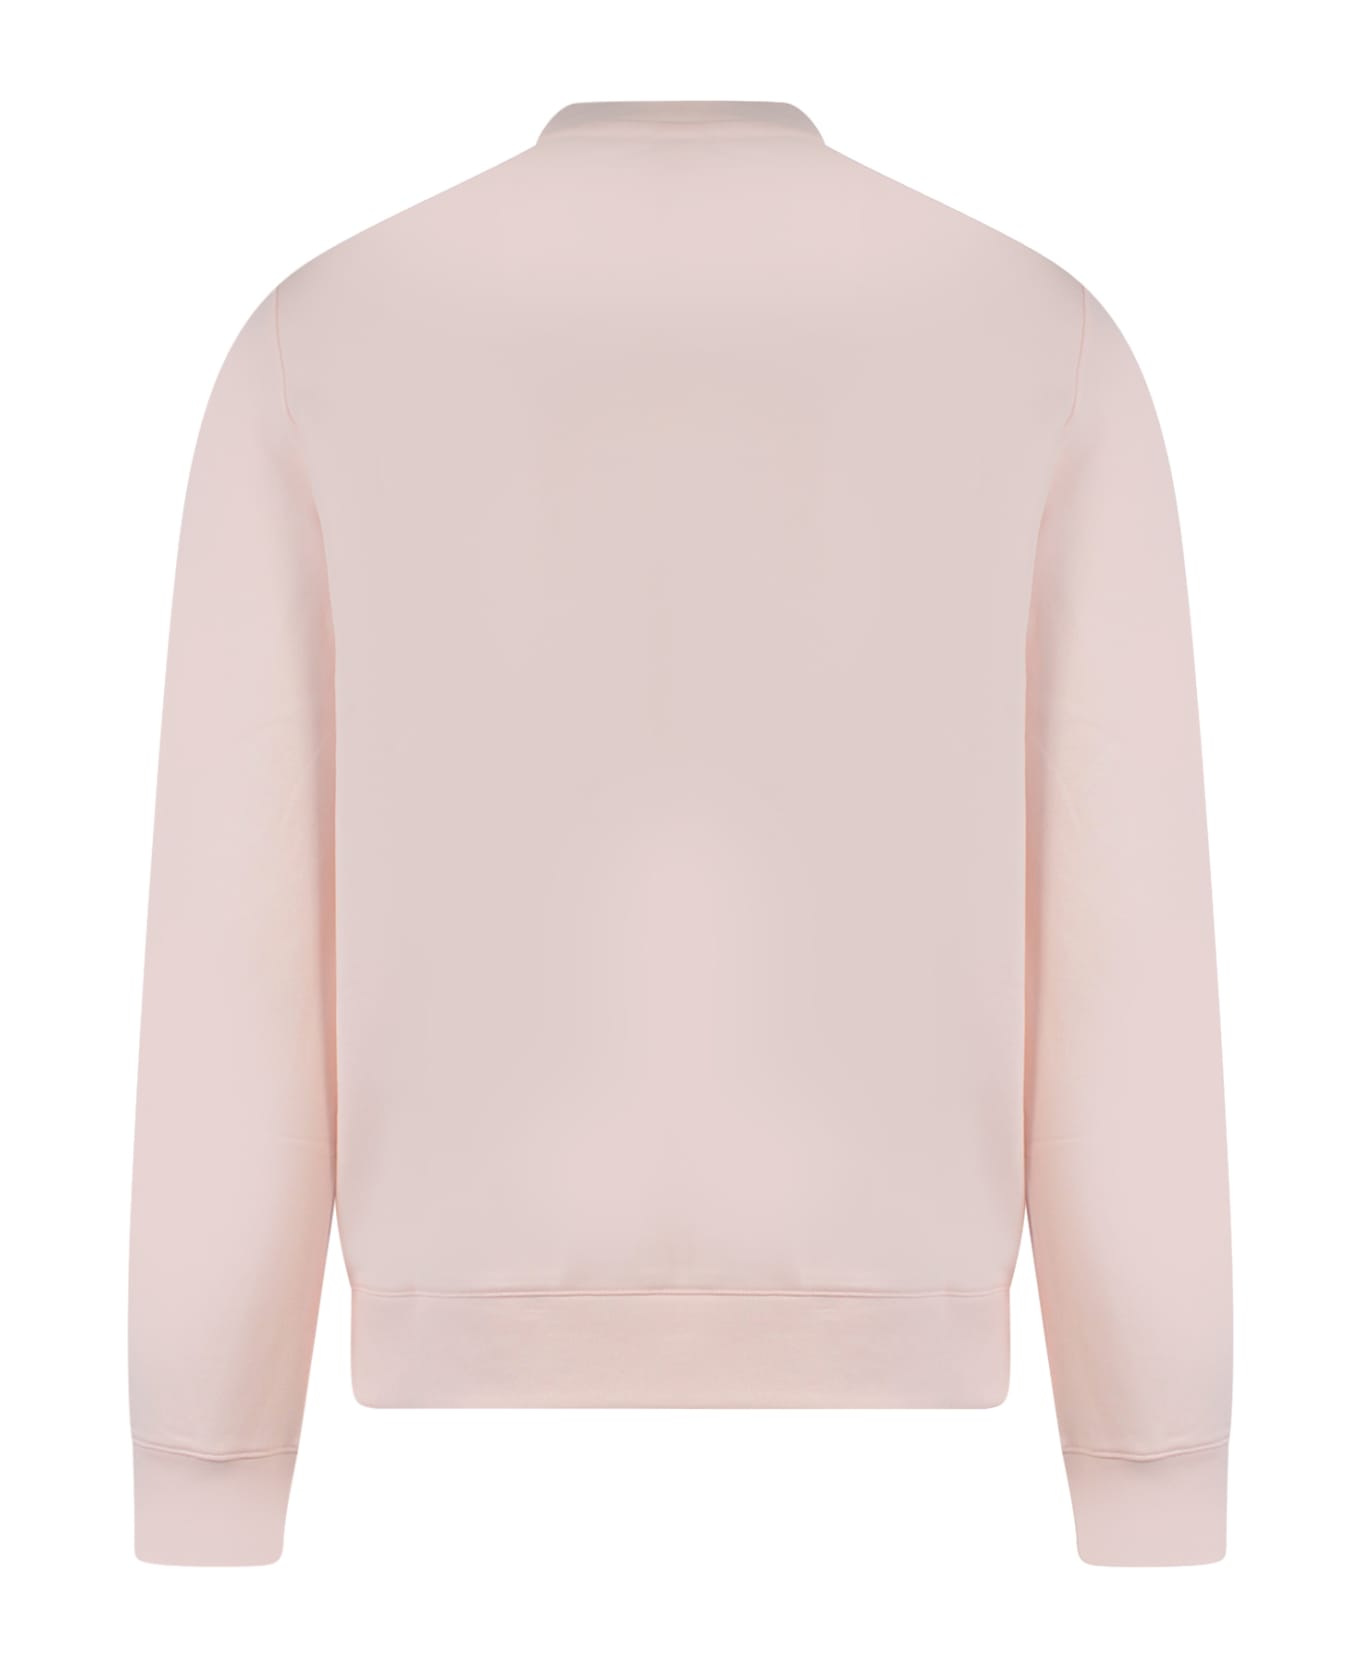 A.P.C. Sweatshirt - Pink フリース